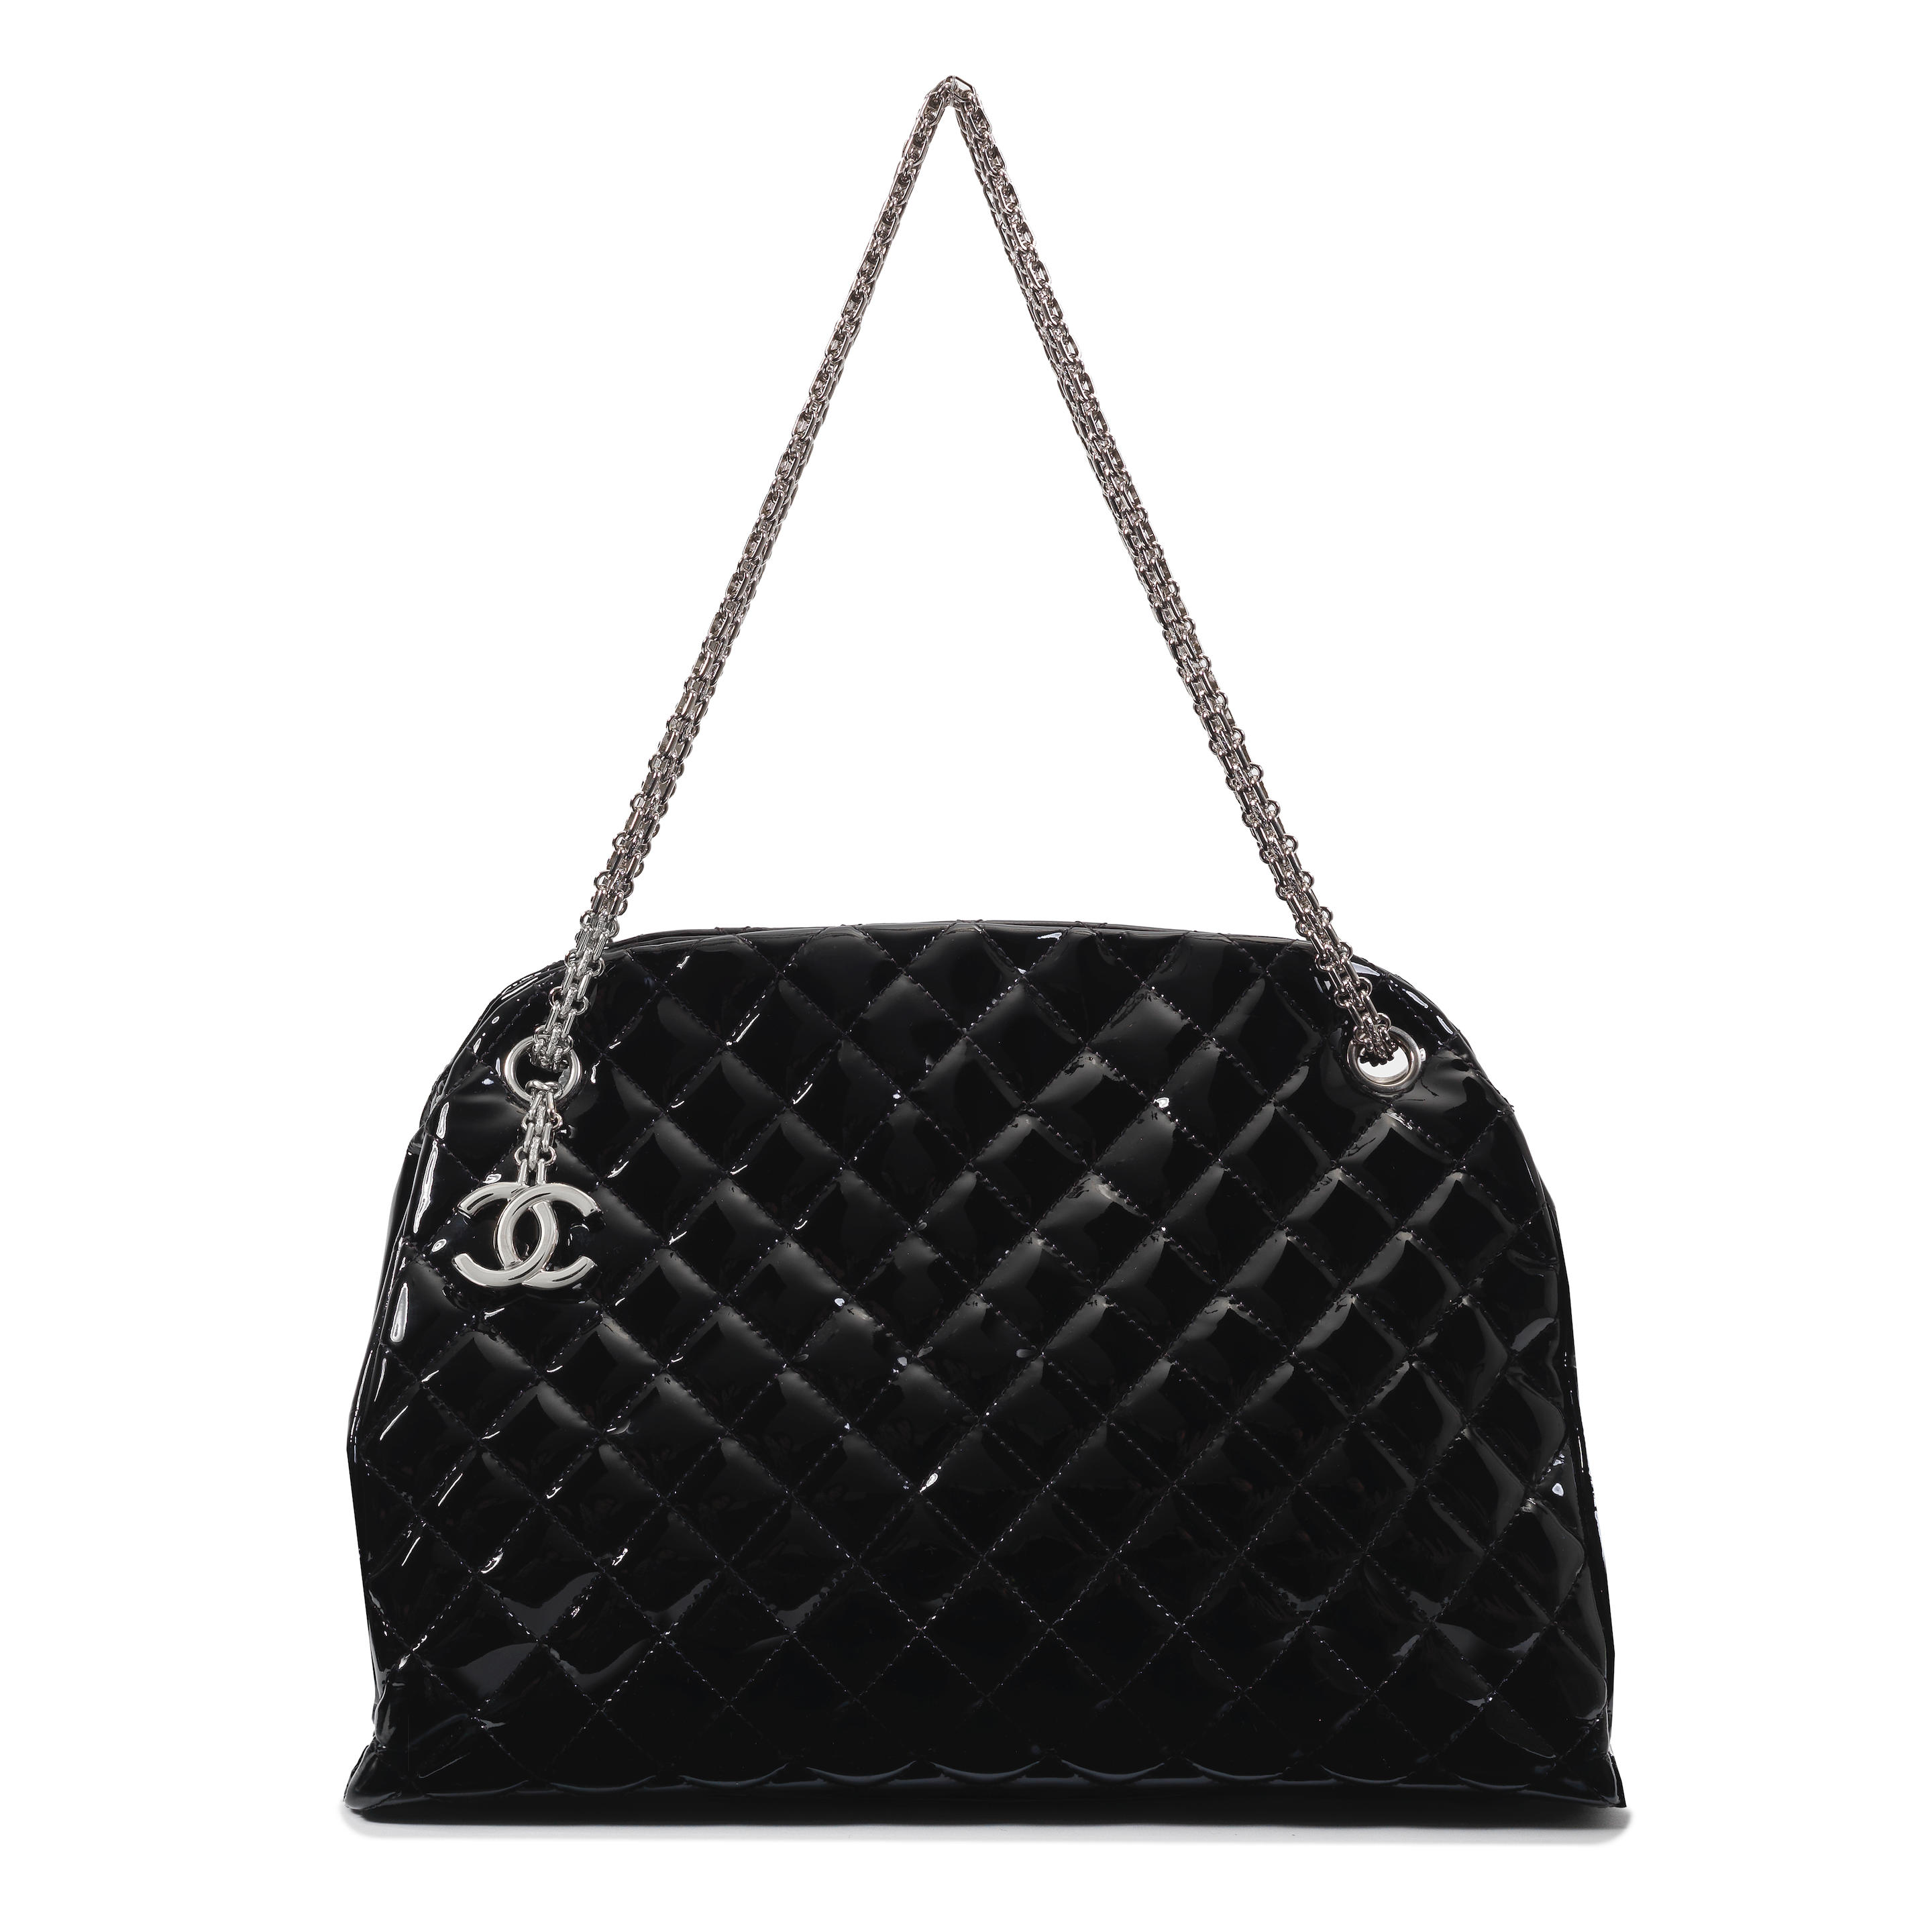 Bonhams : Karl Lagerfeld for Chanel a Black Patent Mademoiselle